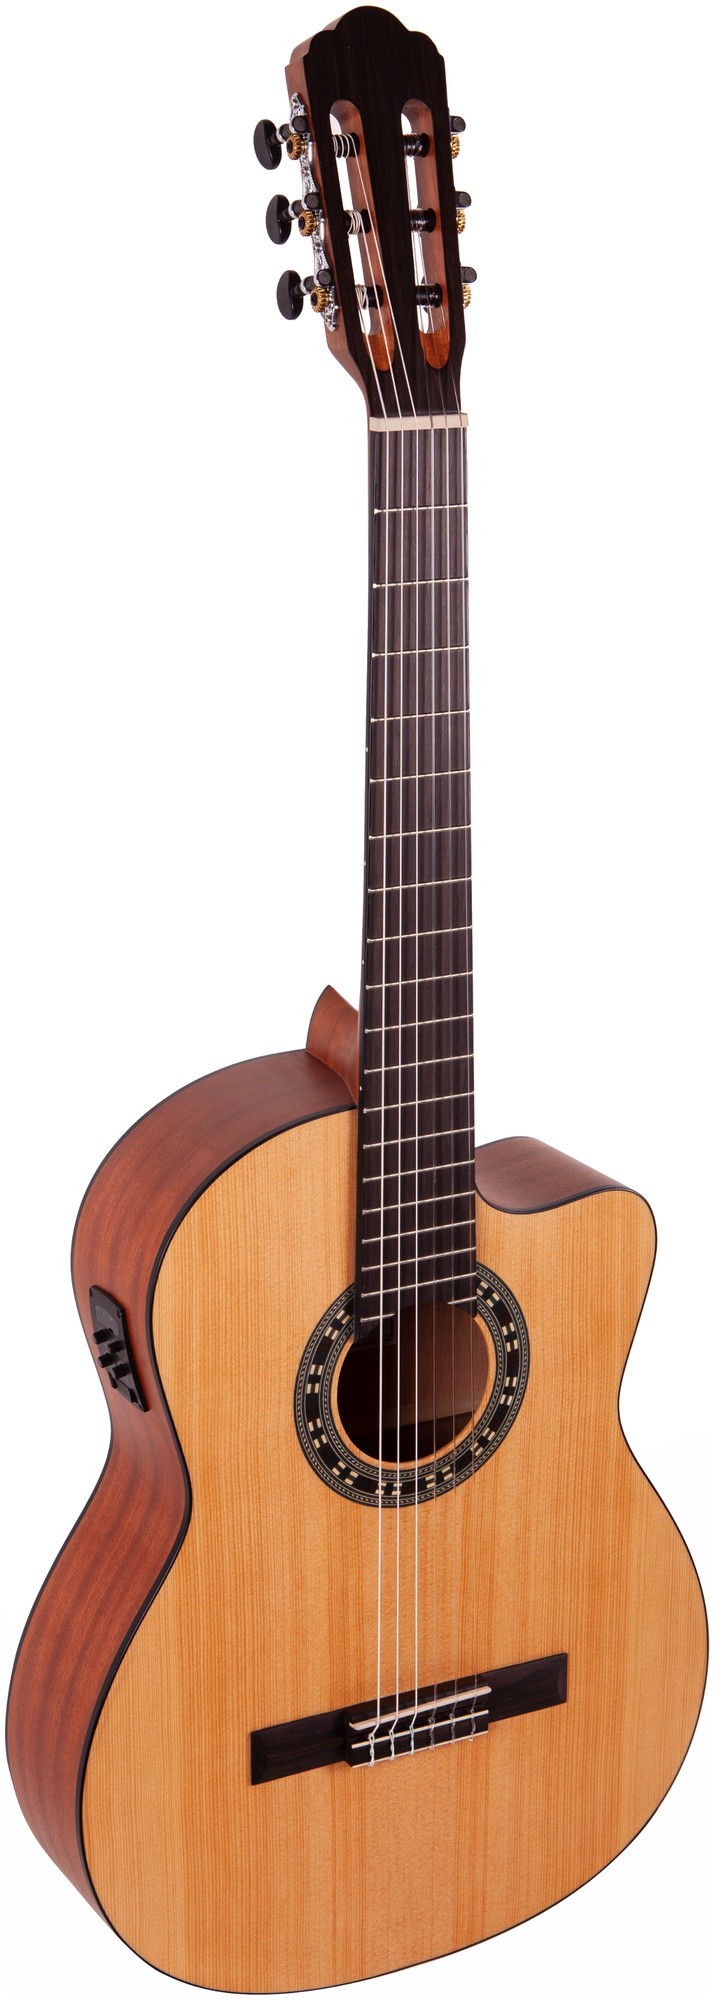 La Mancha Granito 32 CE-N электроакустическая гитара